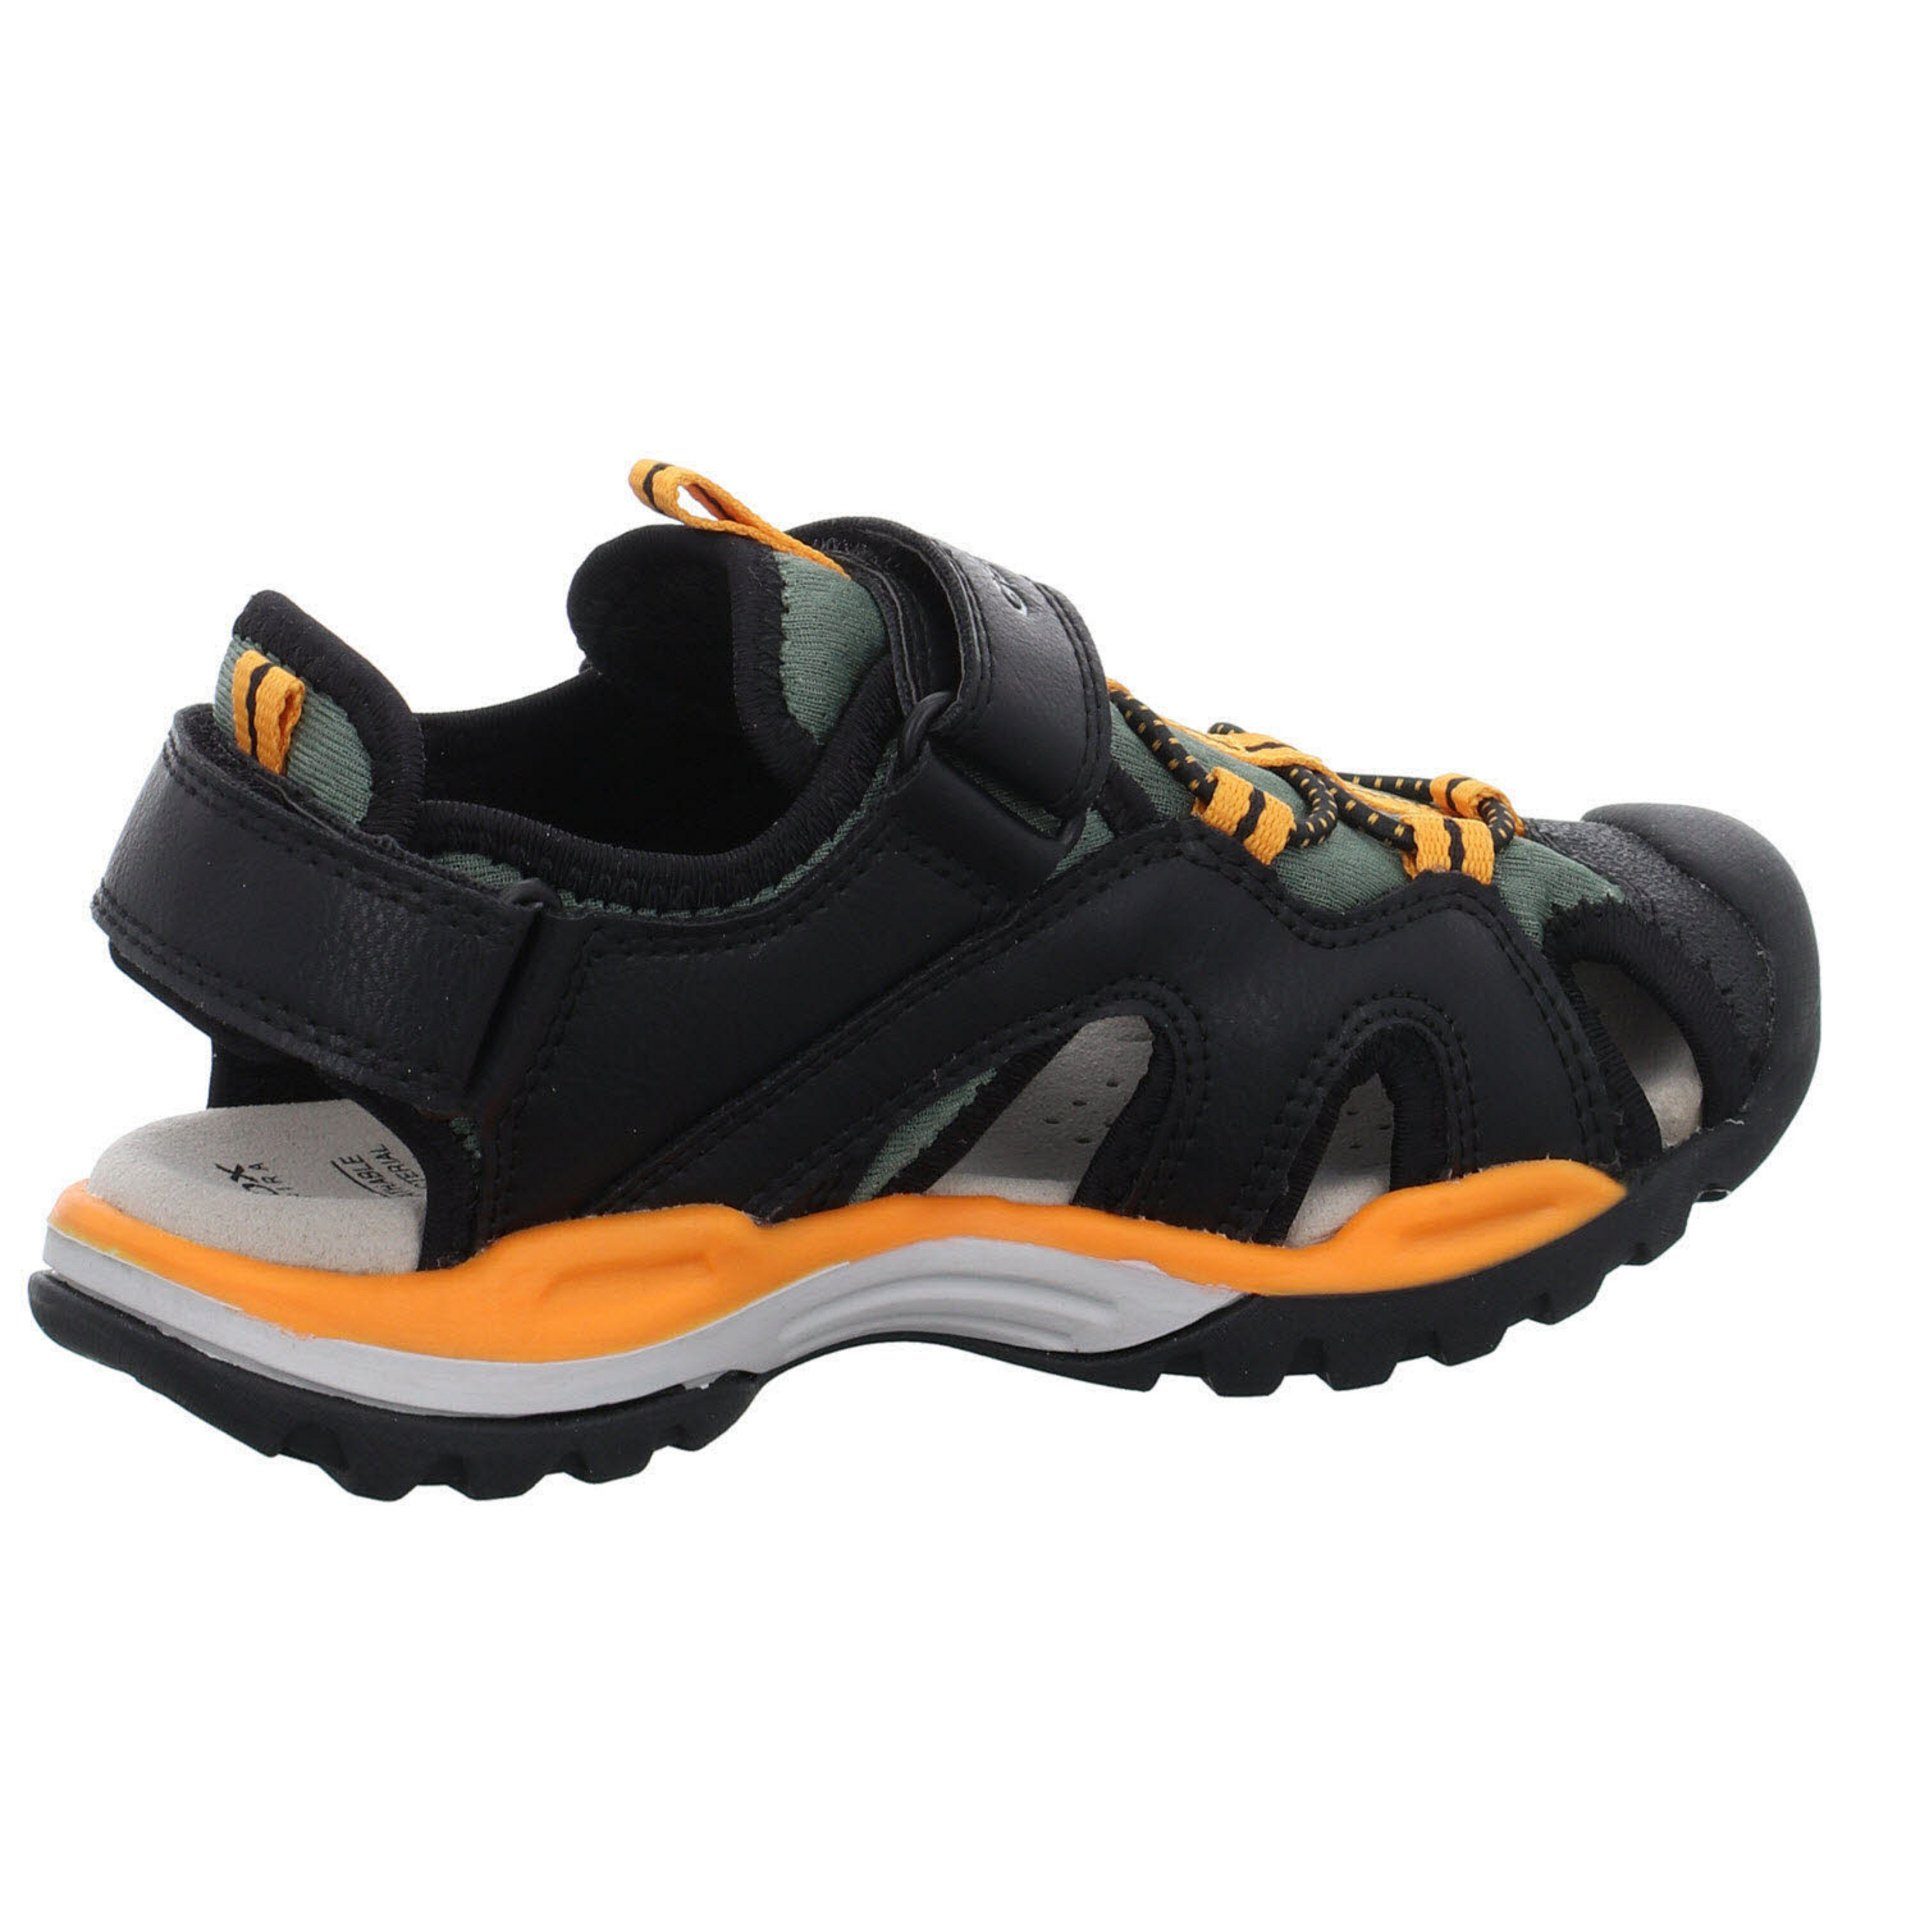 Orange Outdoorsandale Sandalen Sandale Jungen Geox Synthetikkombination Schuhe Schwarz Borealis